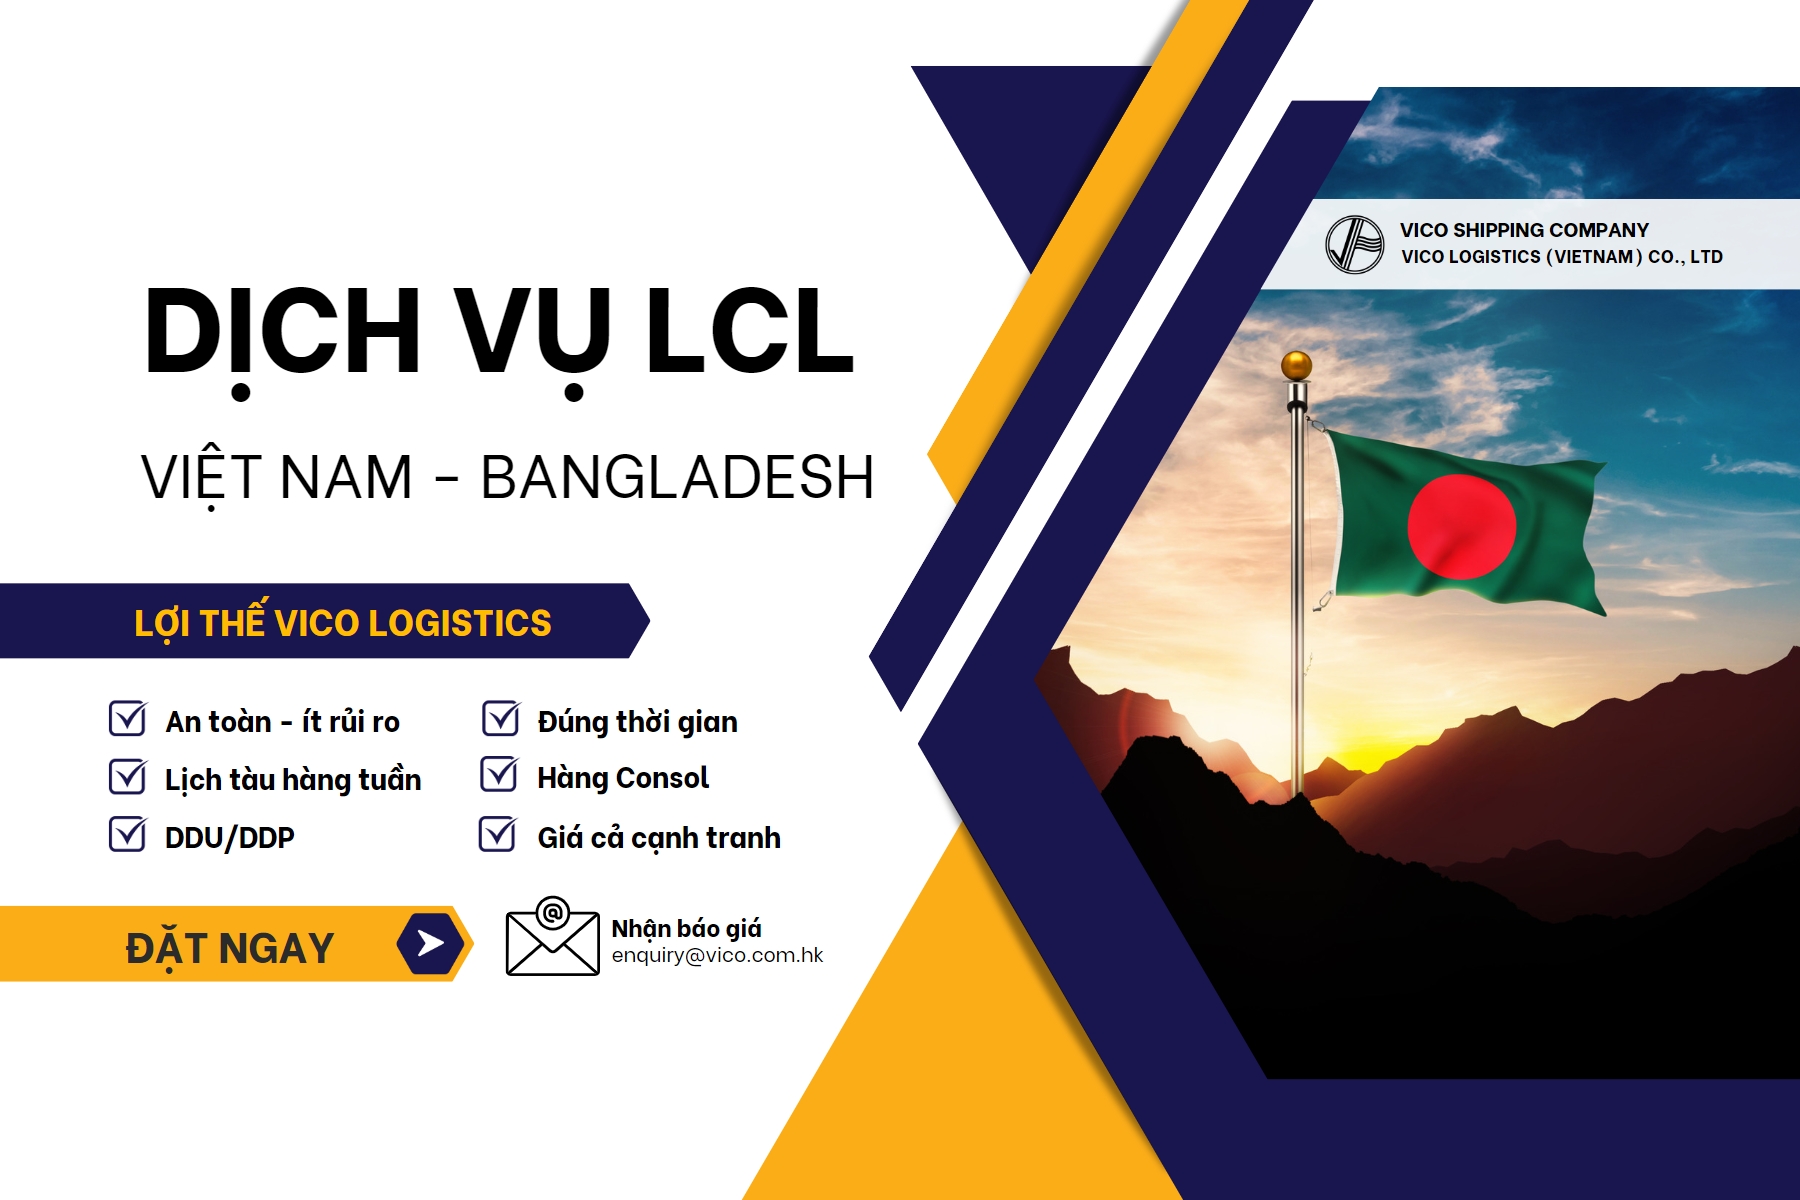 LCL shipment Vietnam - Bangladesh VICO Logistics 